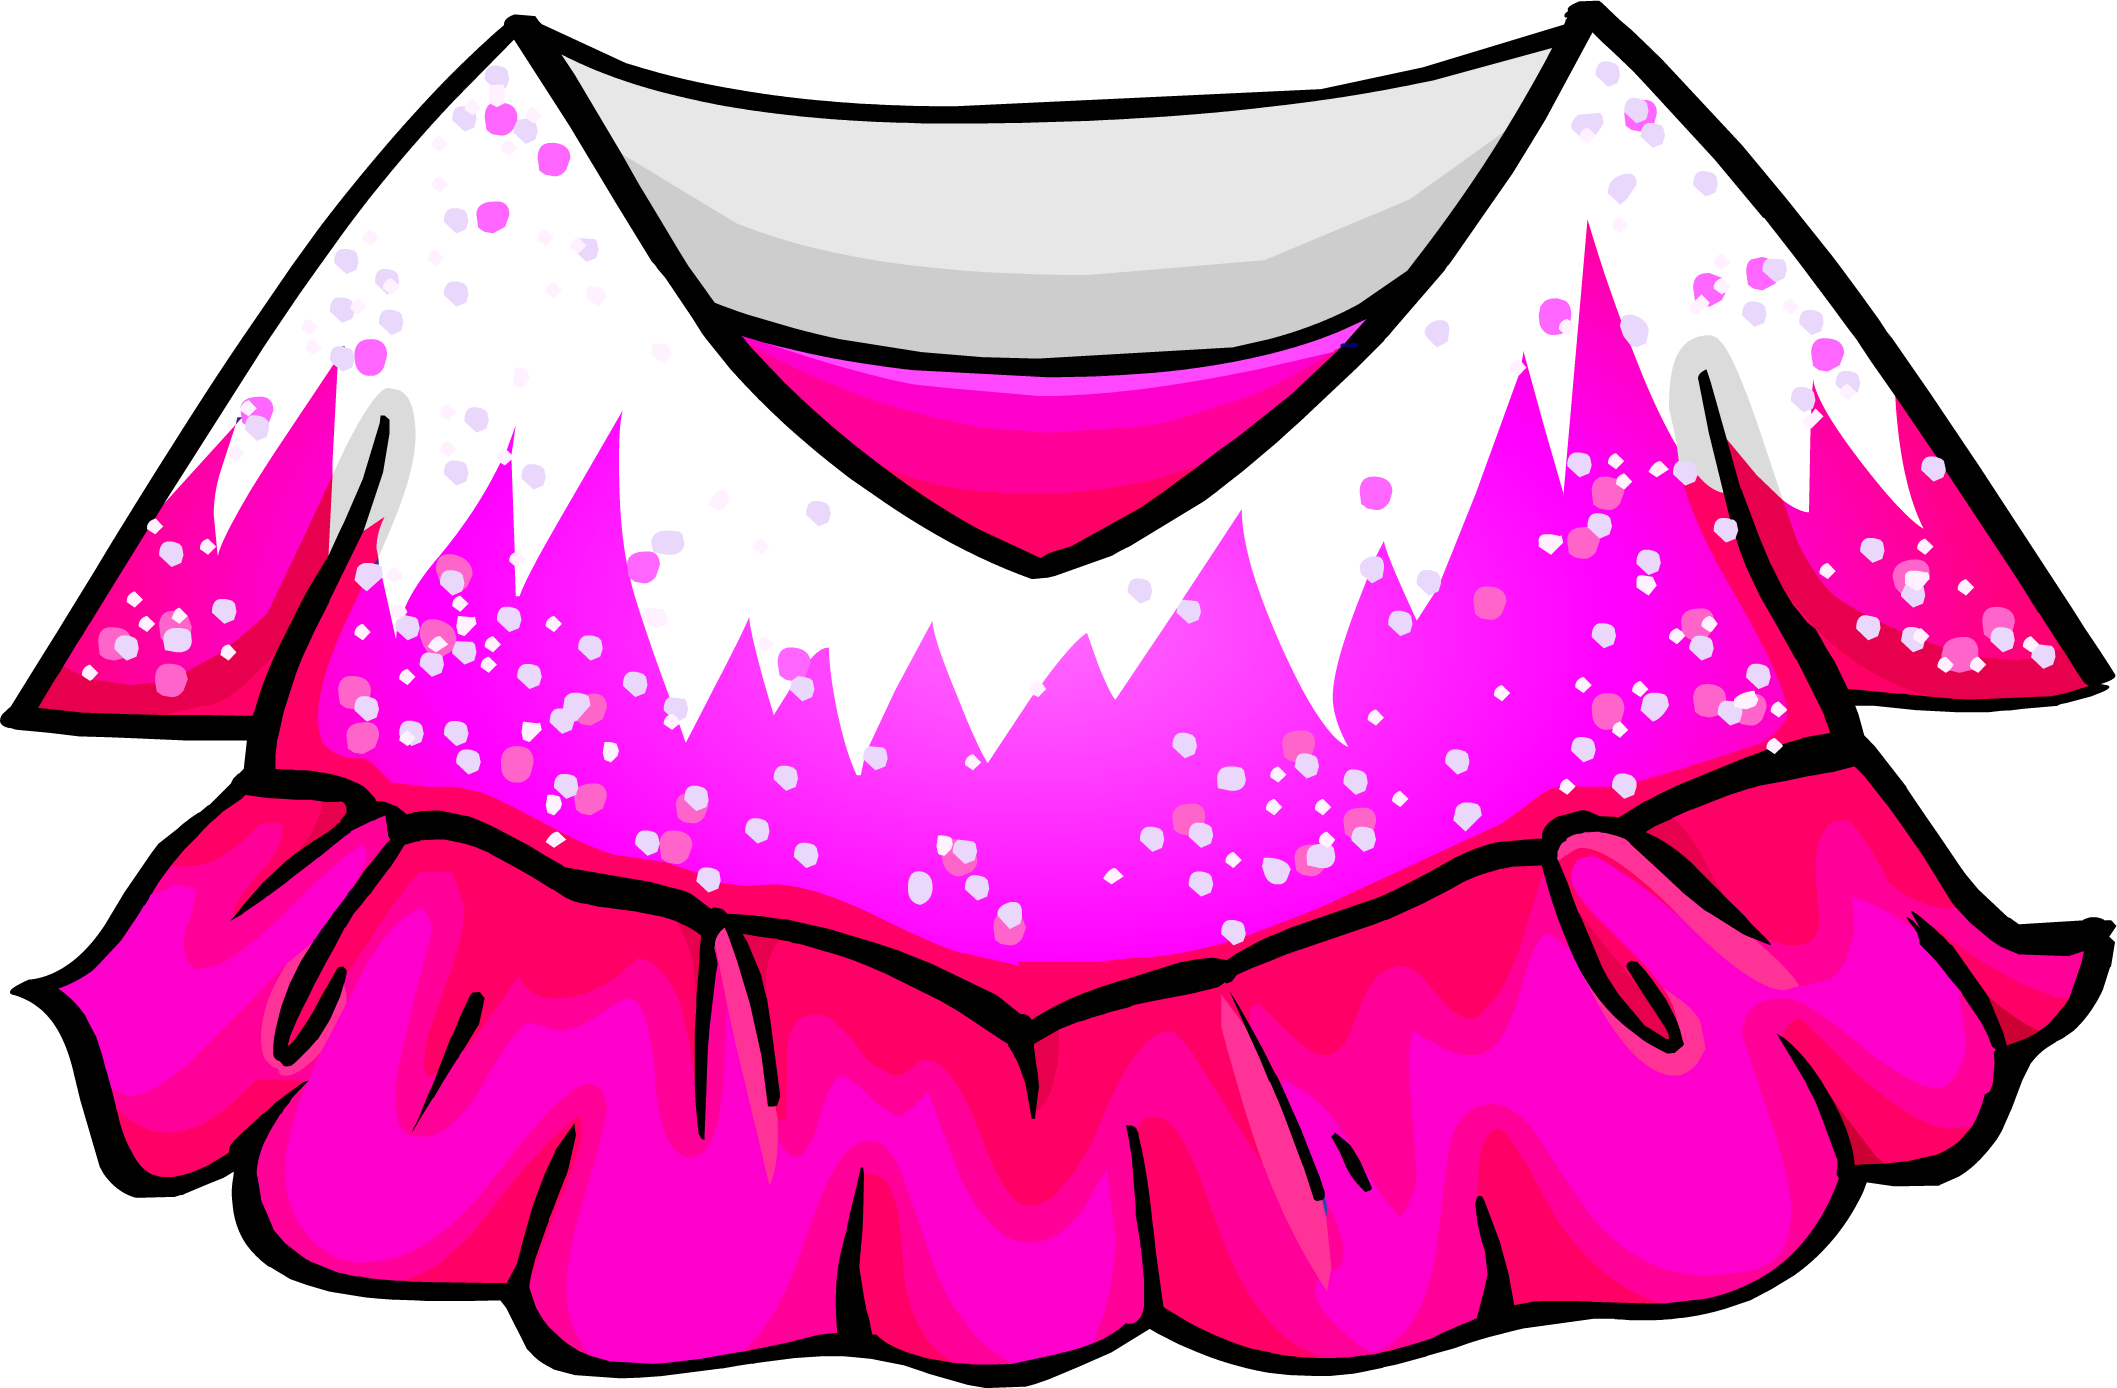 Pink Figure Skating Dress - Club Penguin Pink Dress (2117x1388)